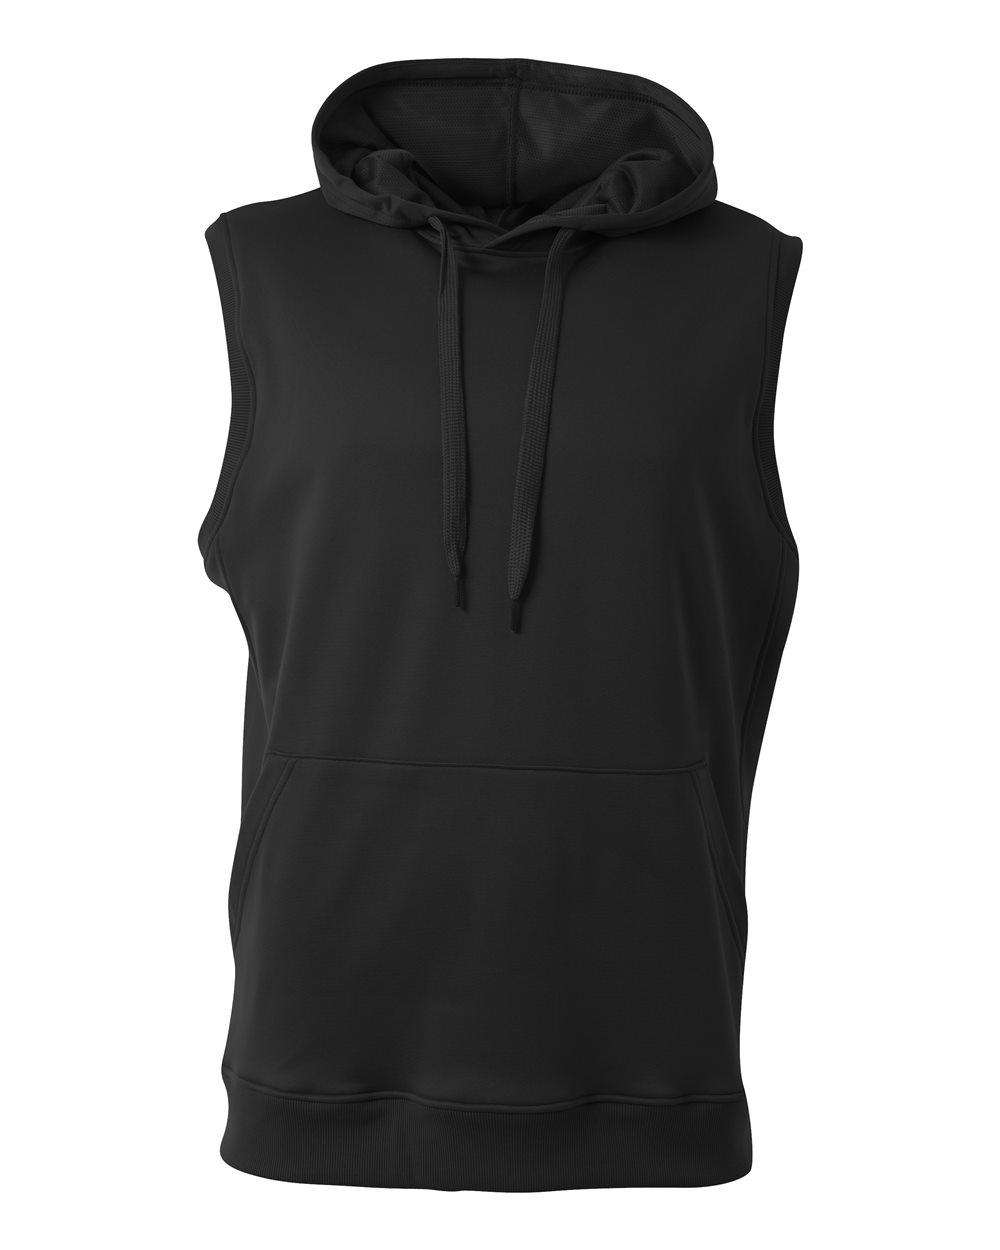 agility sleeveless hoodie black